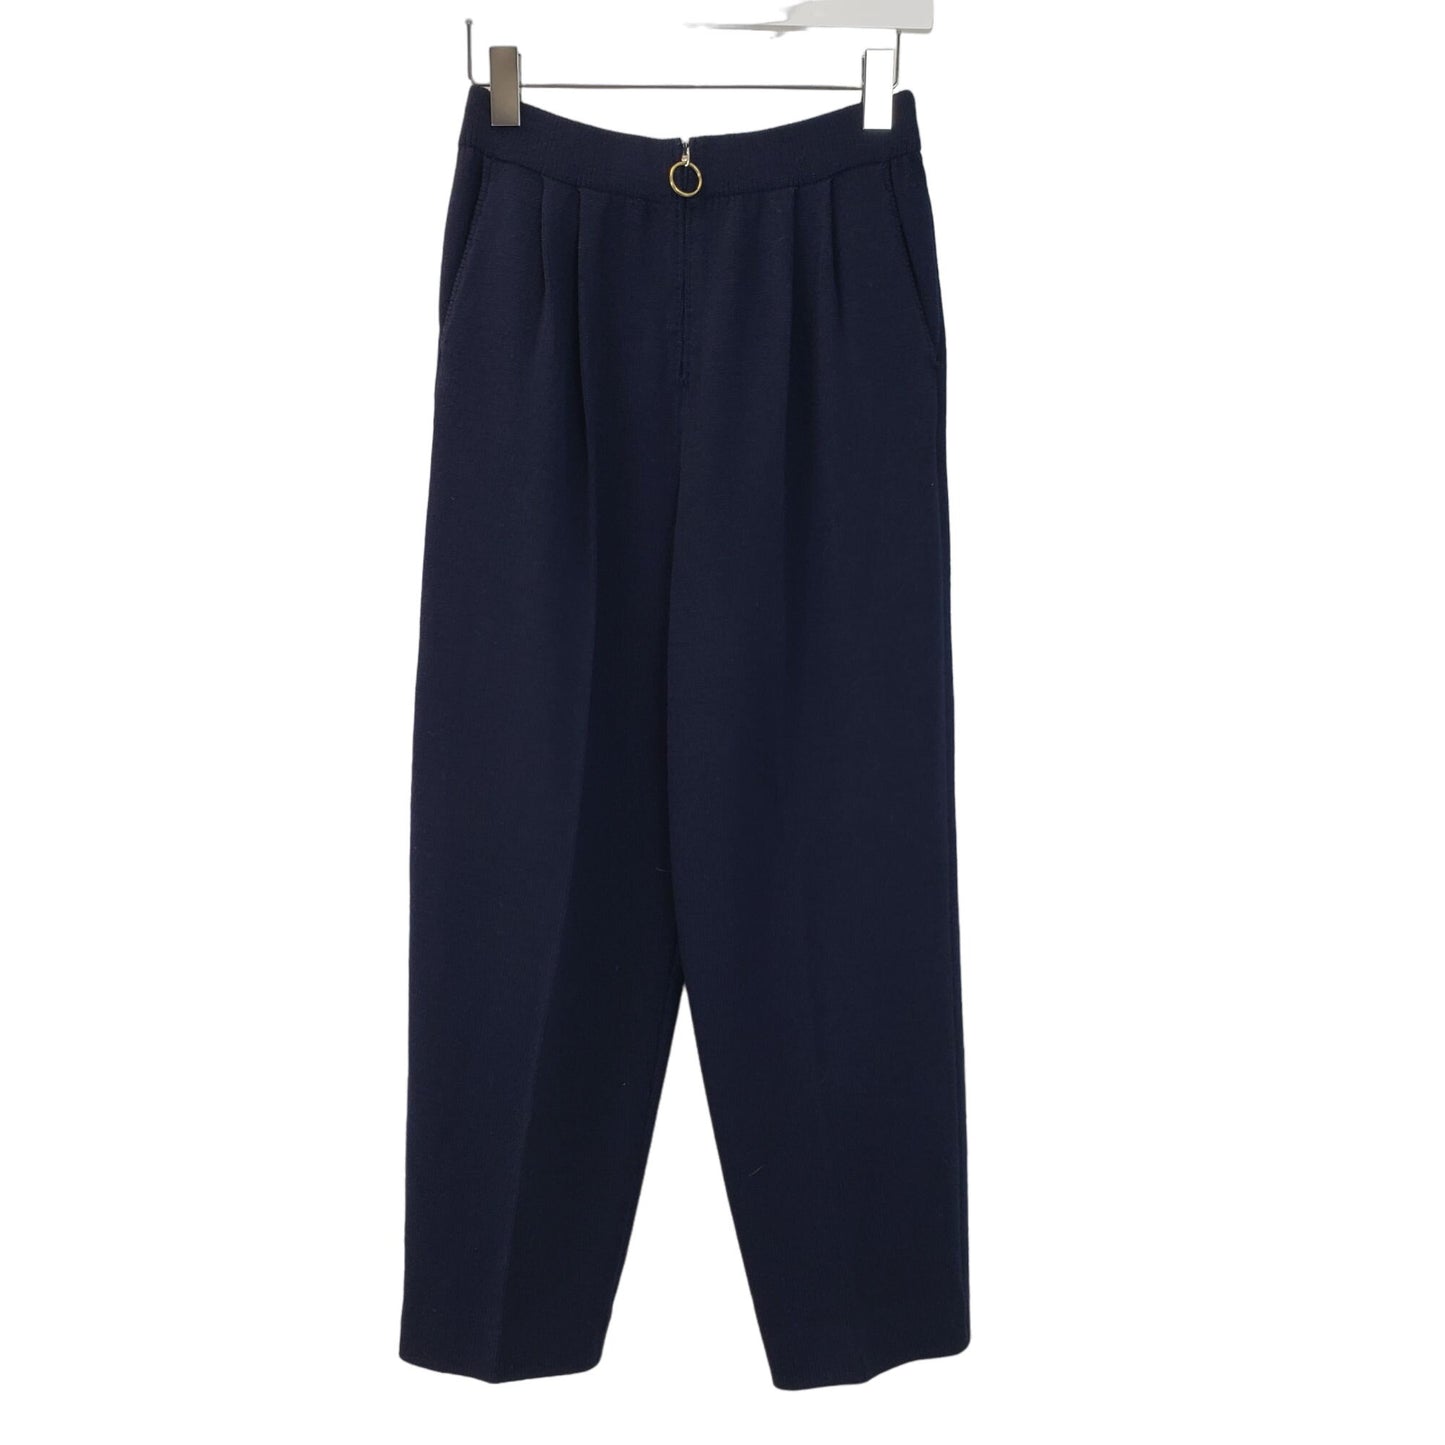 St. John Santana Knit Zip Front High Rise Pants Size 6